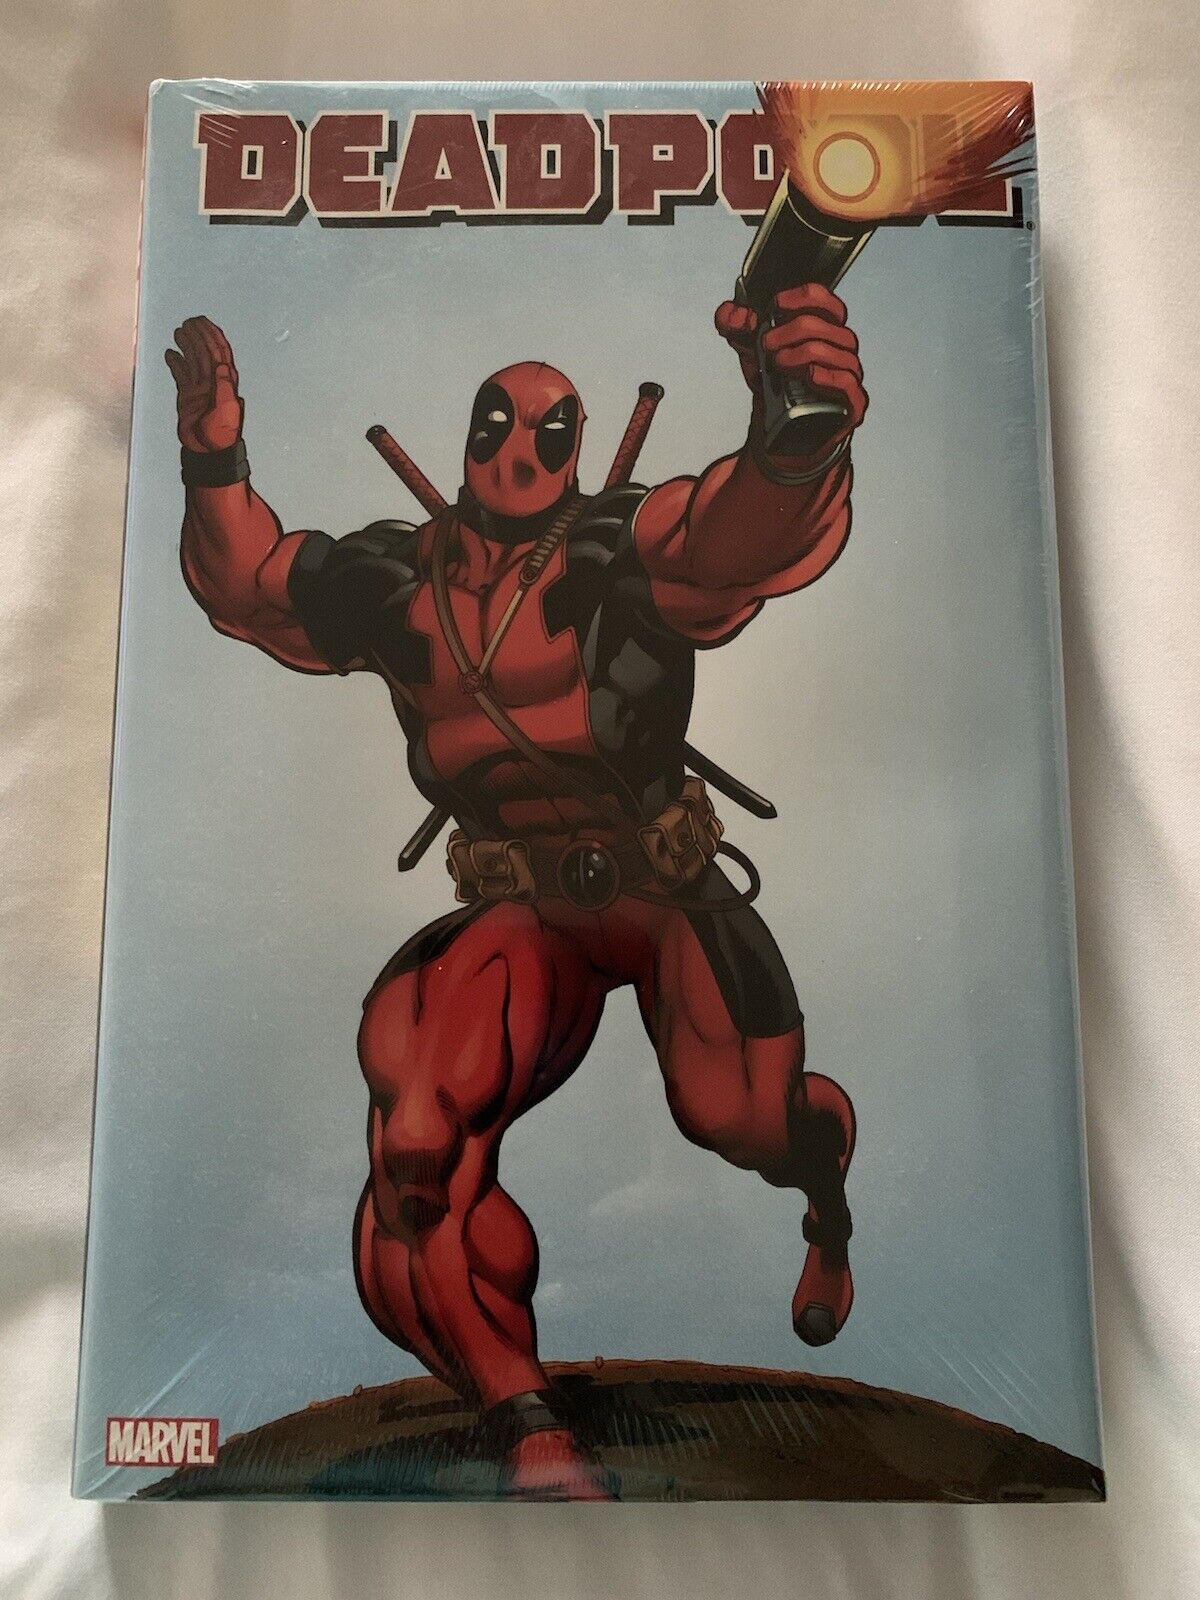 MARVEL  Deadpool Vol 1 Crazier Than A Sack Of Ferrets (2011,Hardcover)